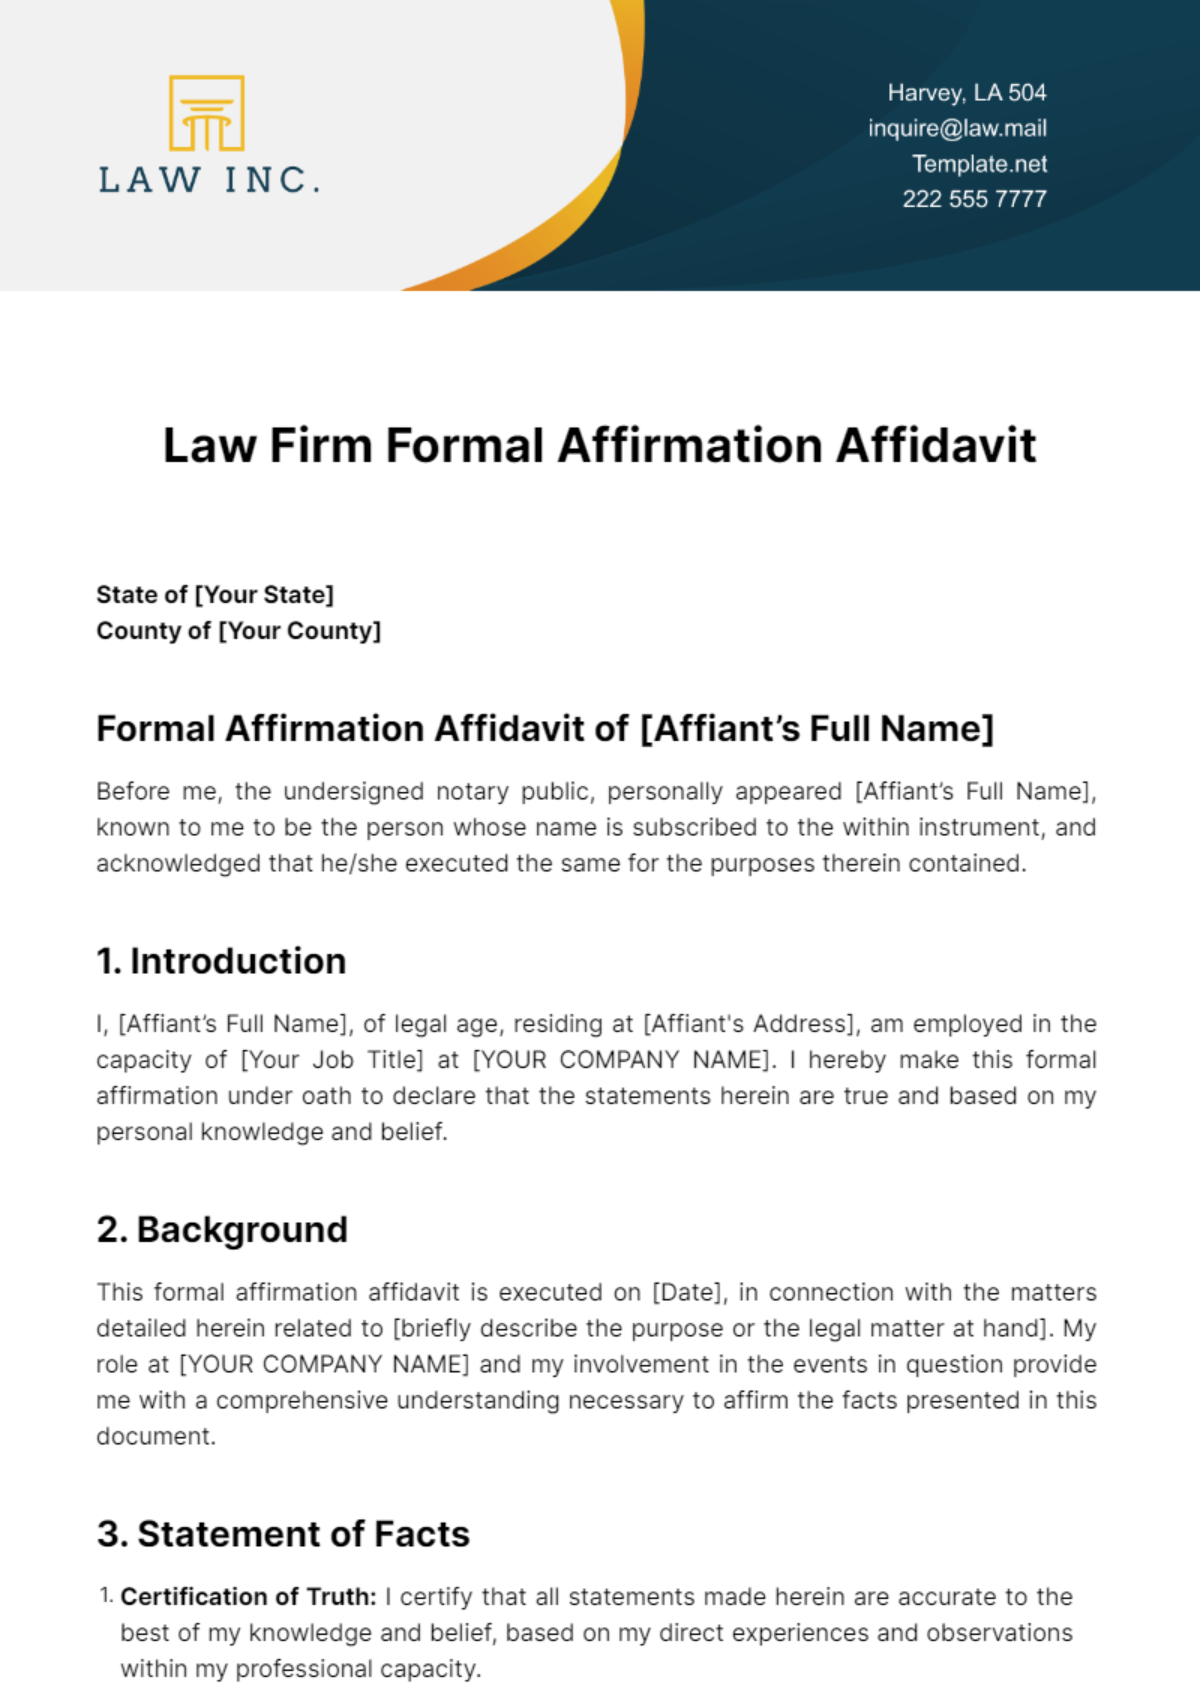 Free Law Firm Formal Affirmation Affidavit Template